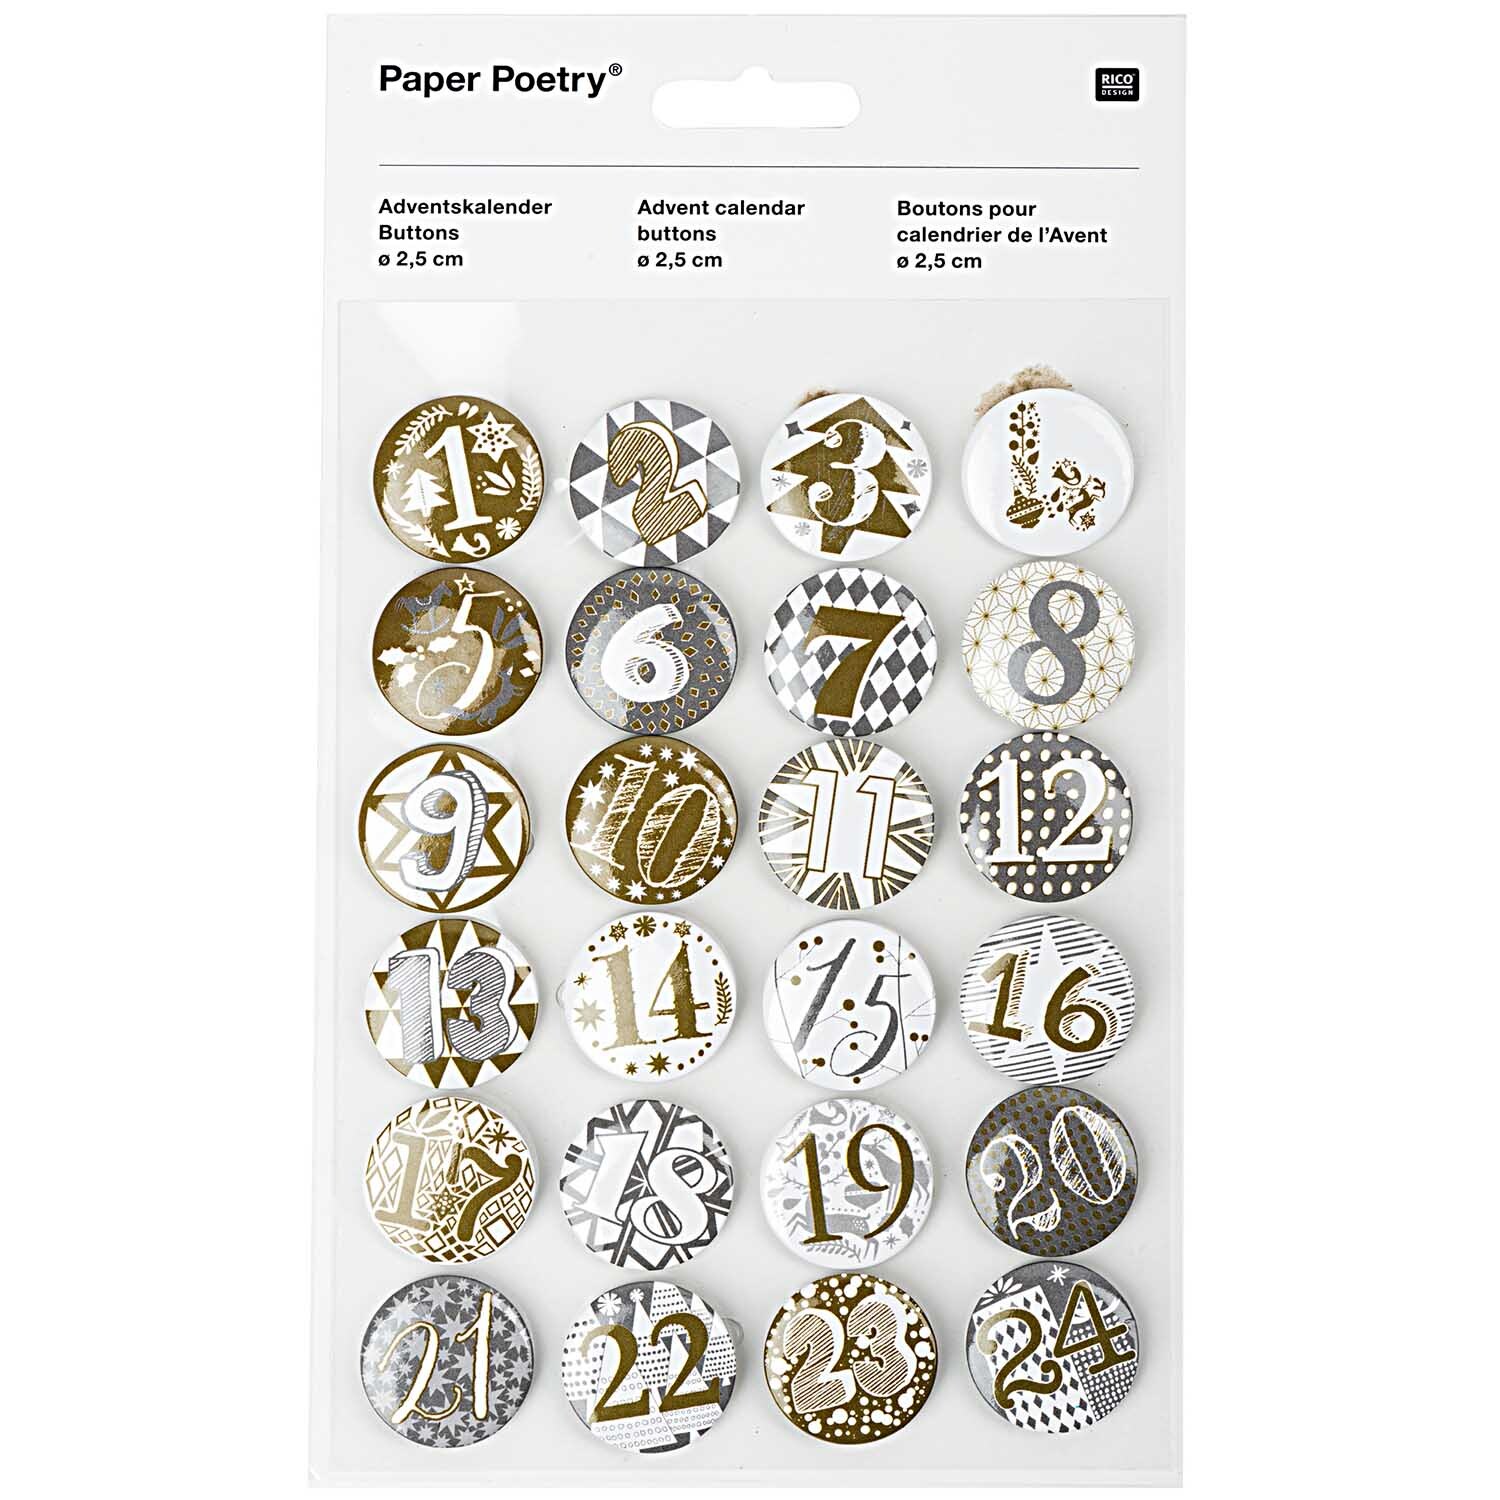 Paper Poetry Adventskalender Zahlen Buttons gold-silber 2,5cm 24 Stück